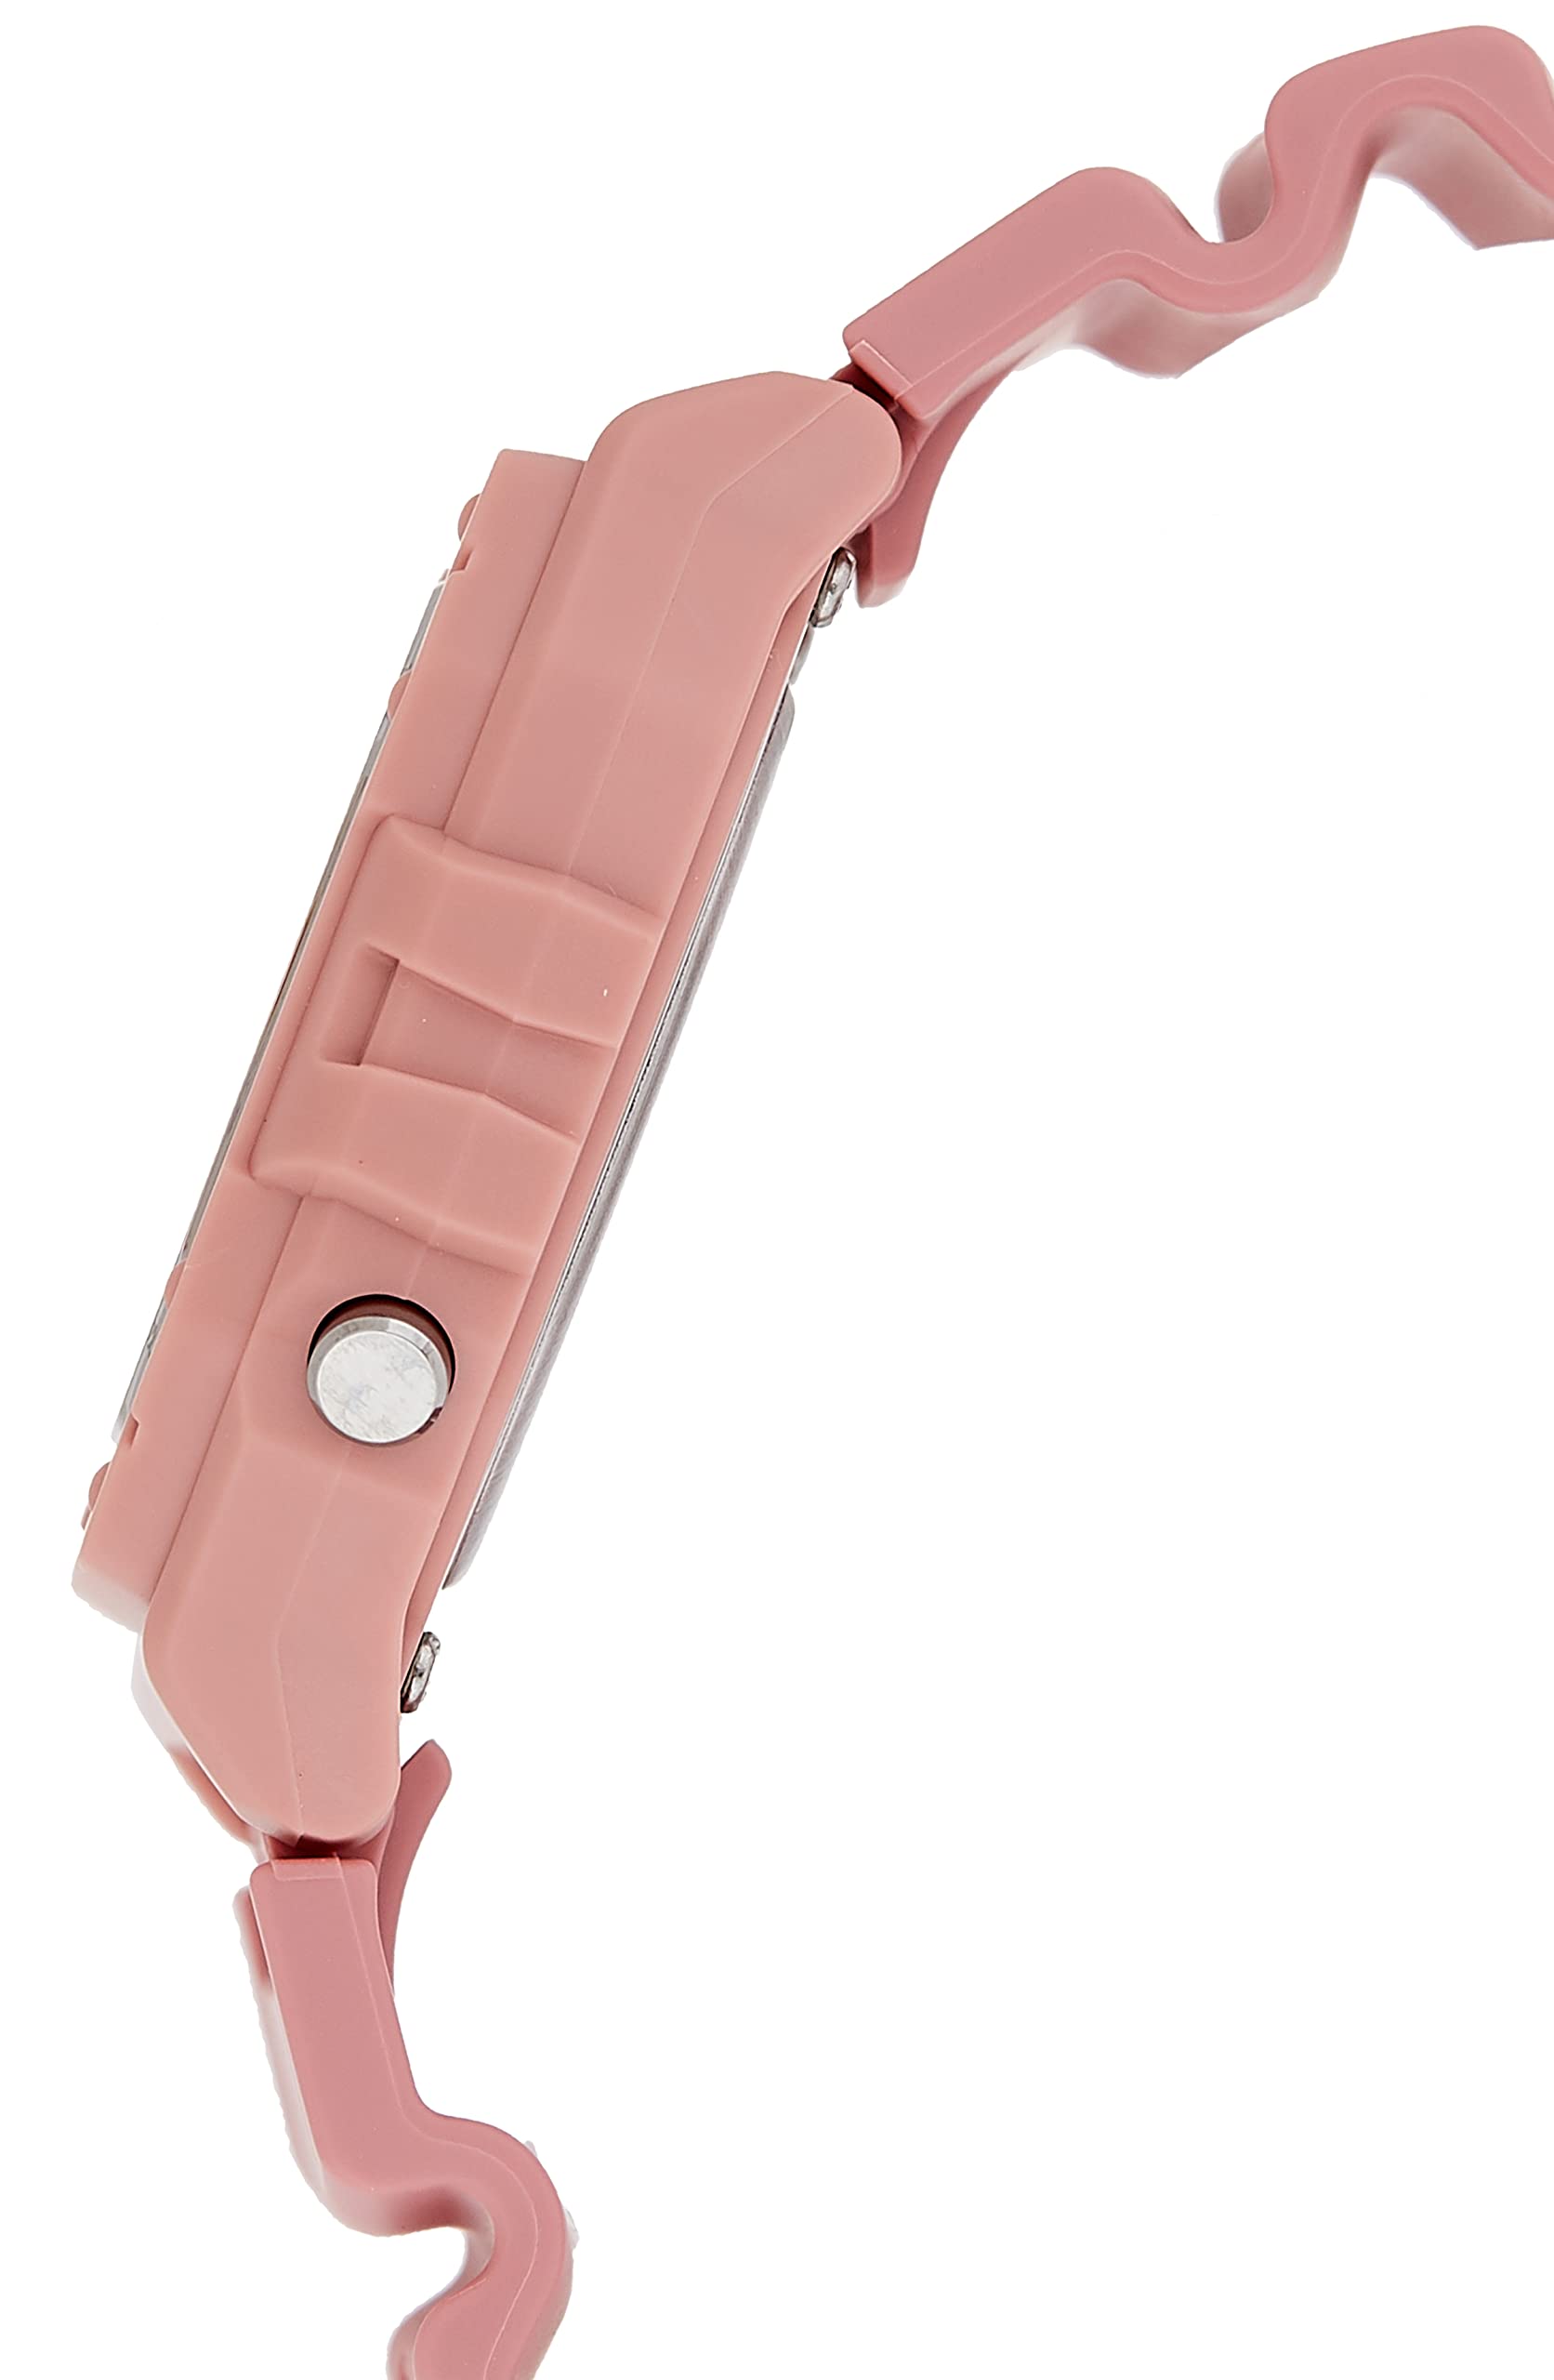 Casio Illuminator Alarm Chronograph Digital Sport Watch (Model W218HC-4AV) (Pink)